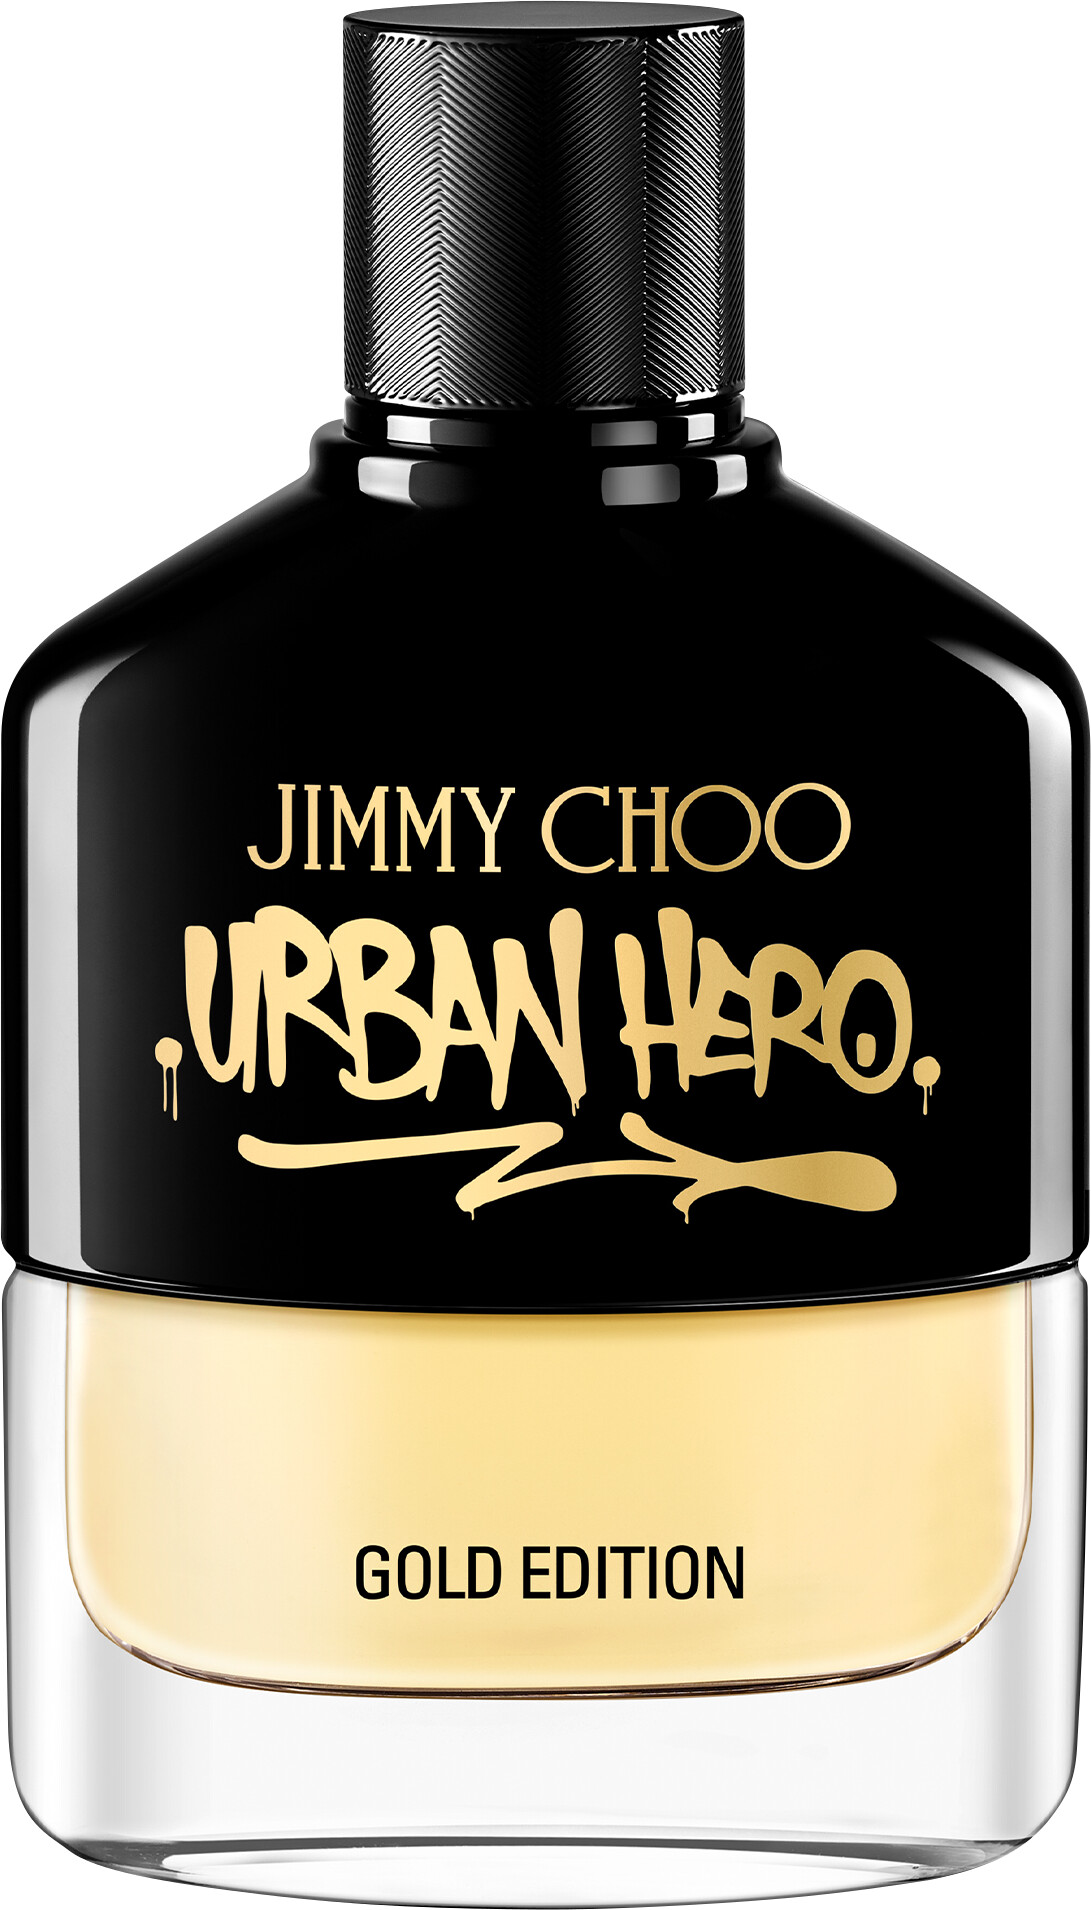 Jimmy Choo Urban Hero Gold Edition Eau de Parfum Spray